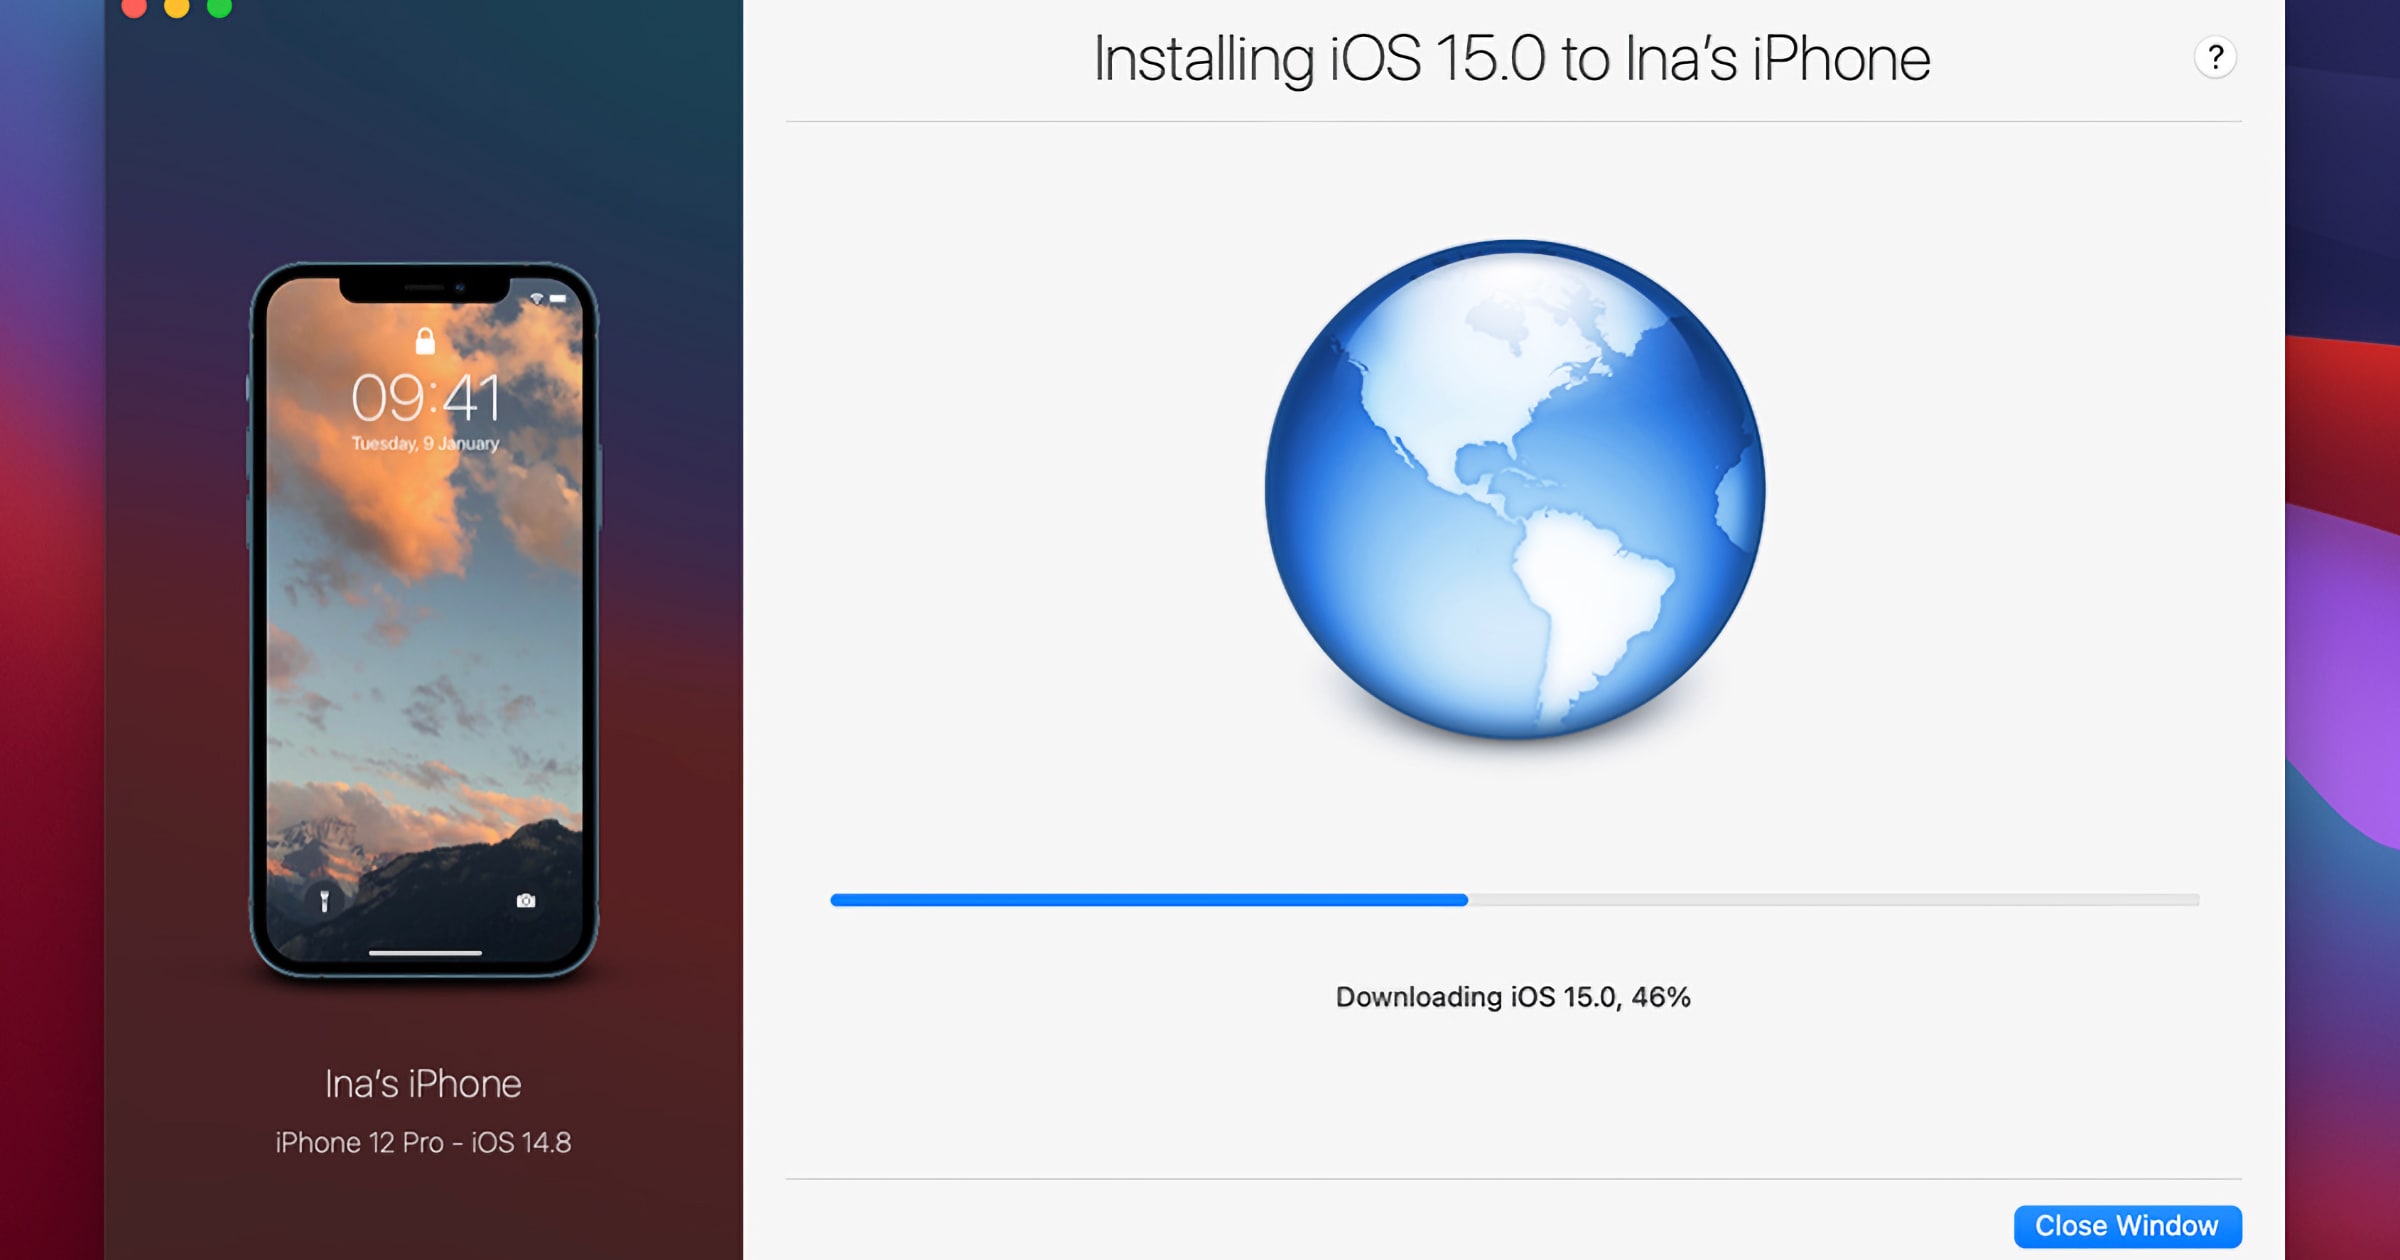 imazing iOS 15 support